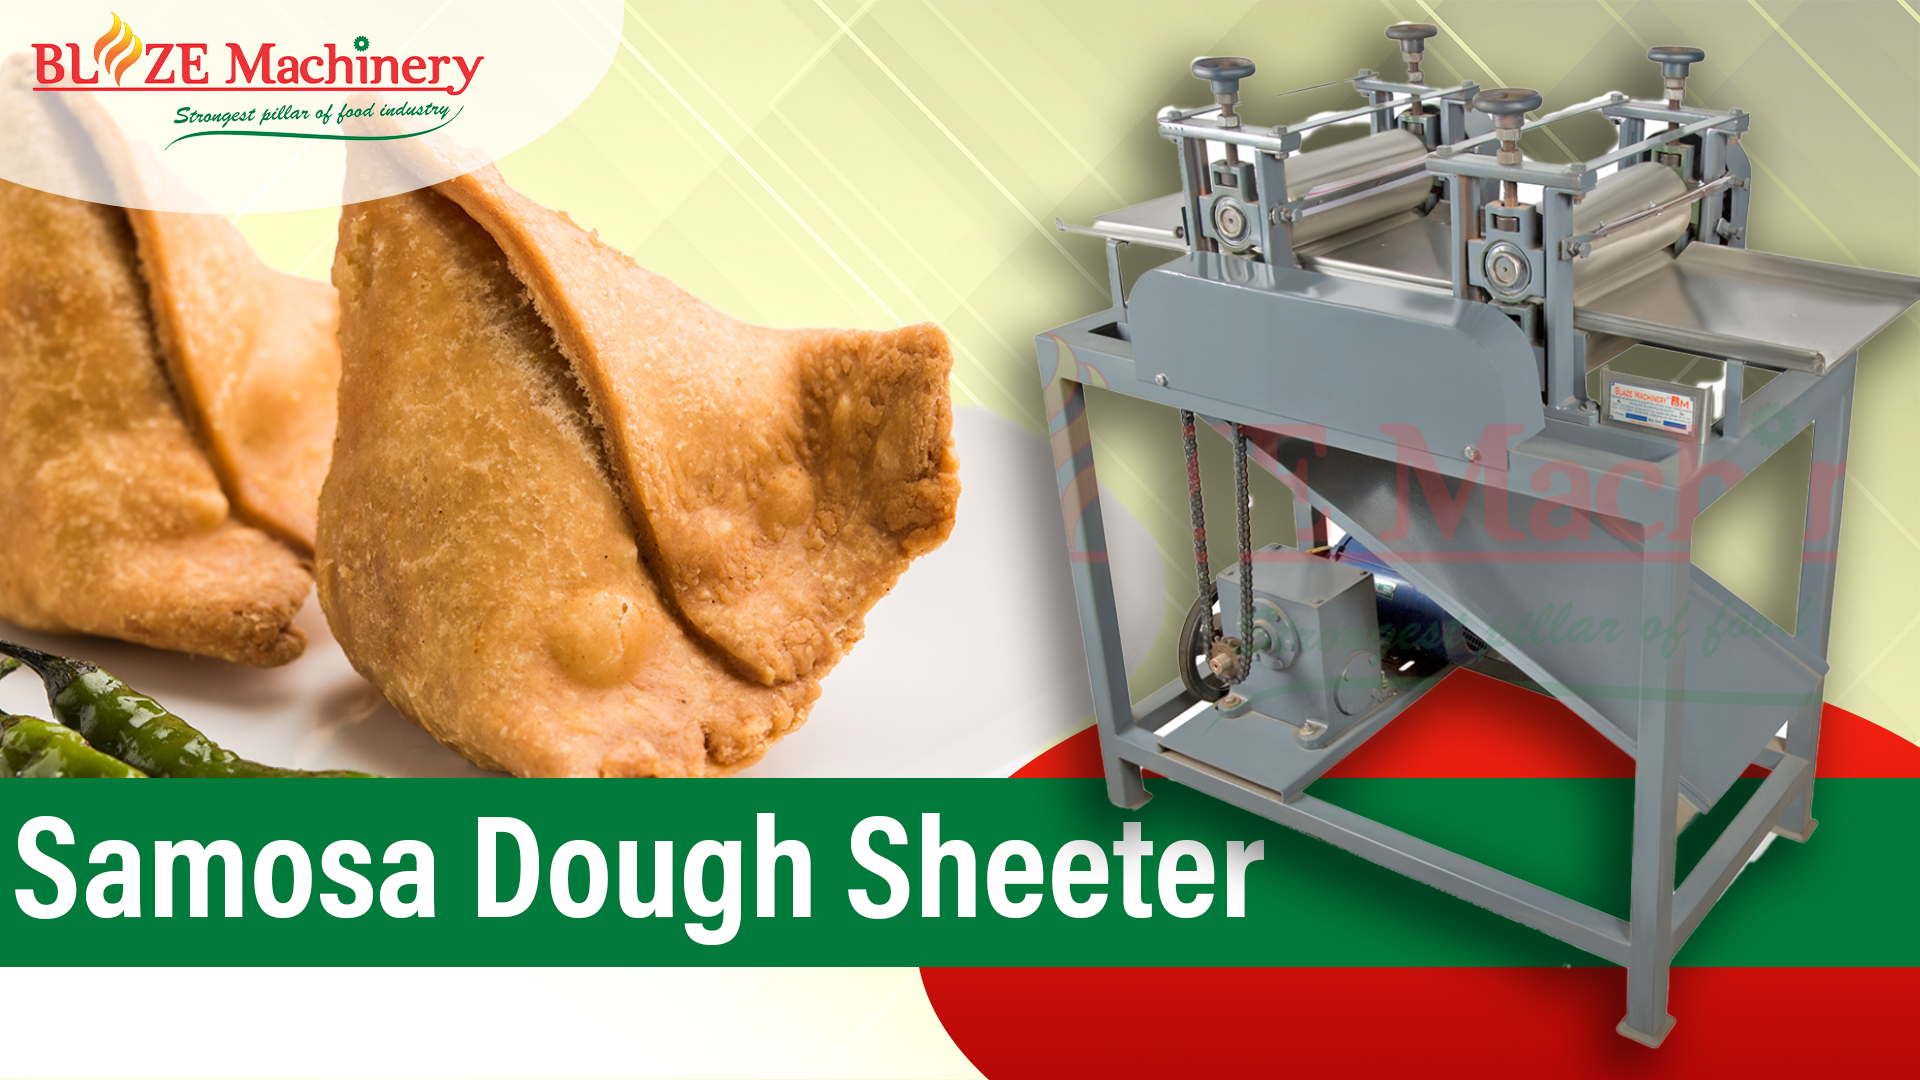 Samosa Dough Sheeter